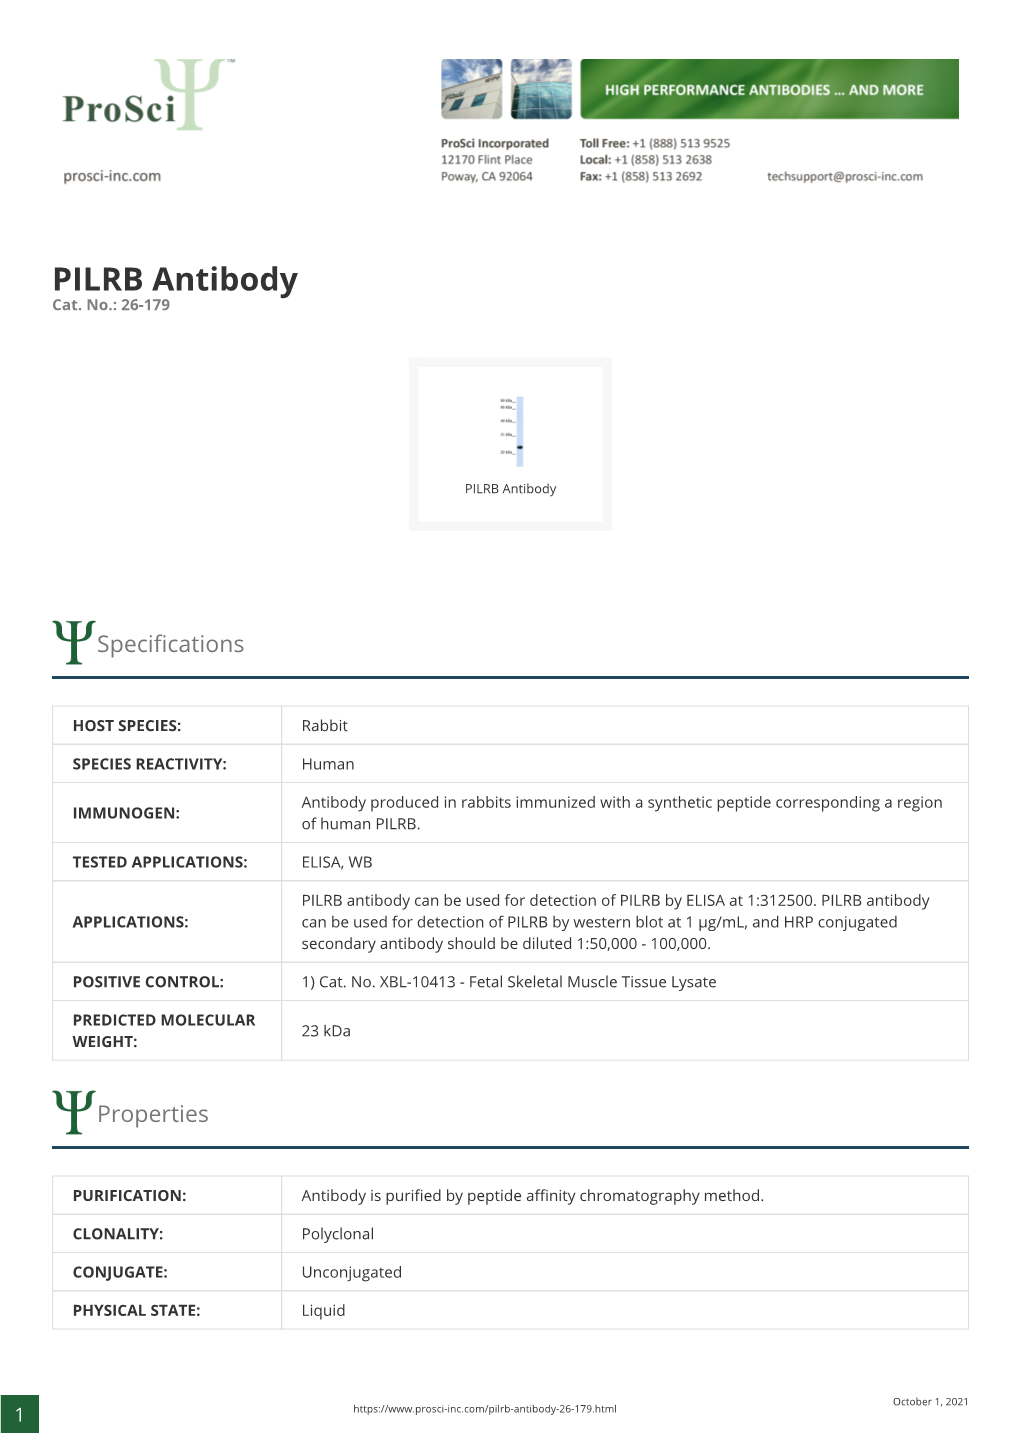 PILRB Antibody Cat